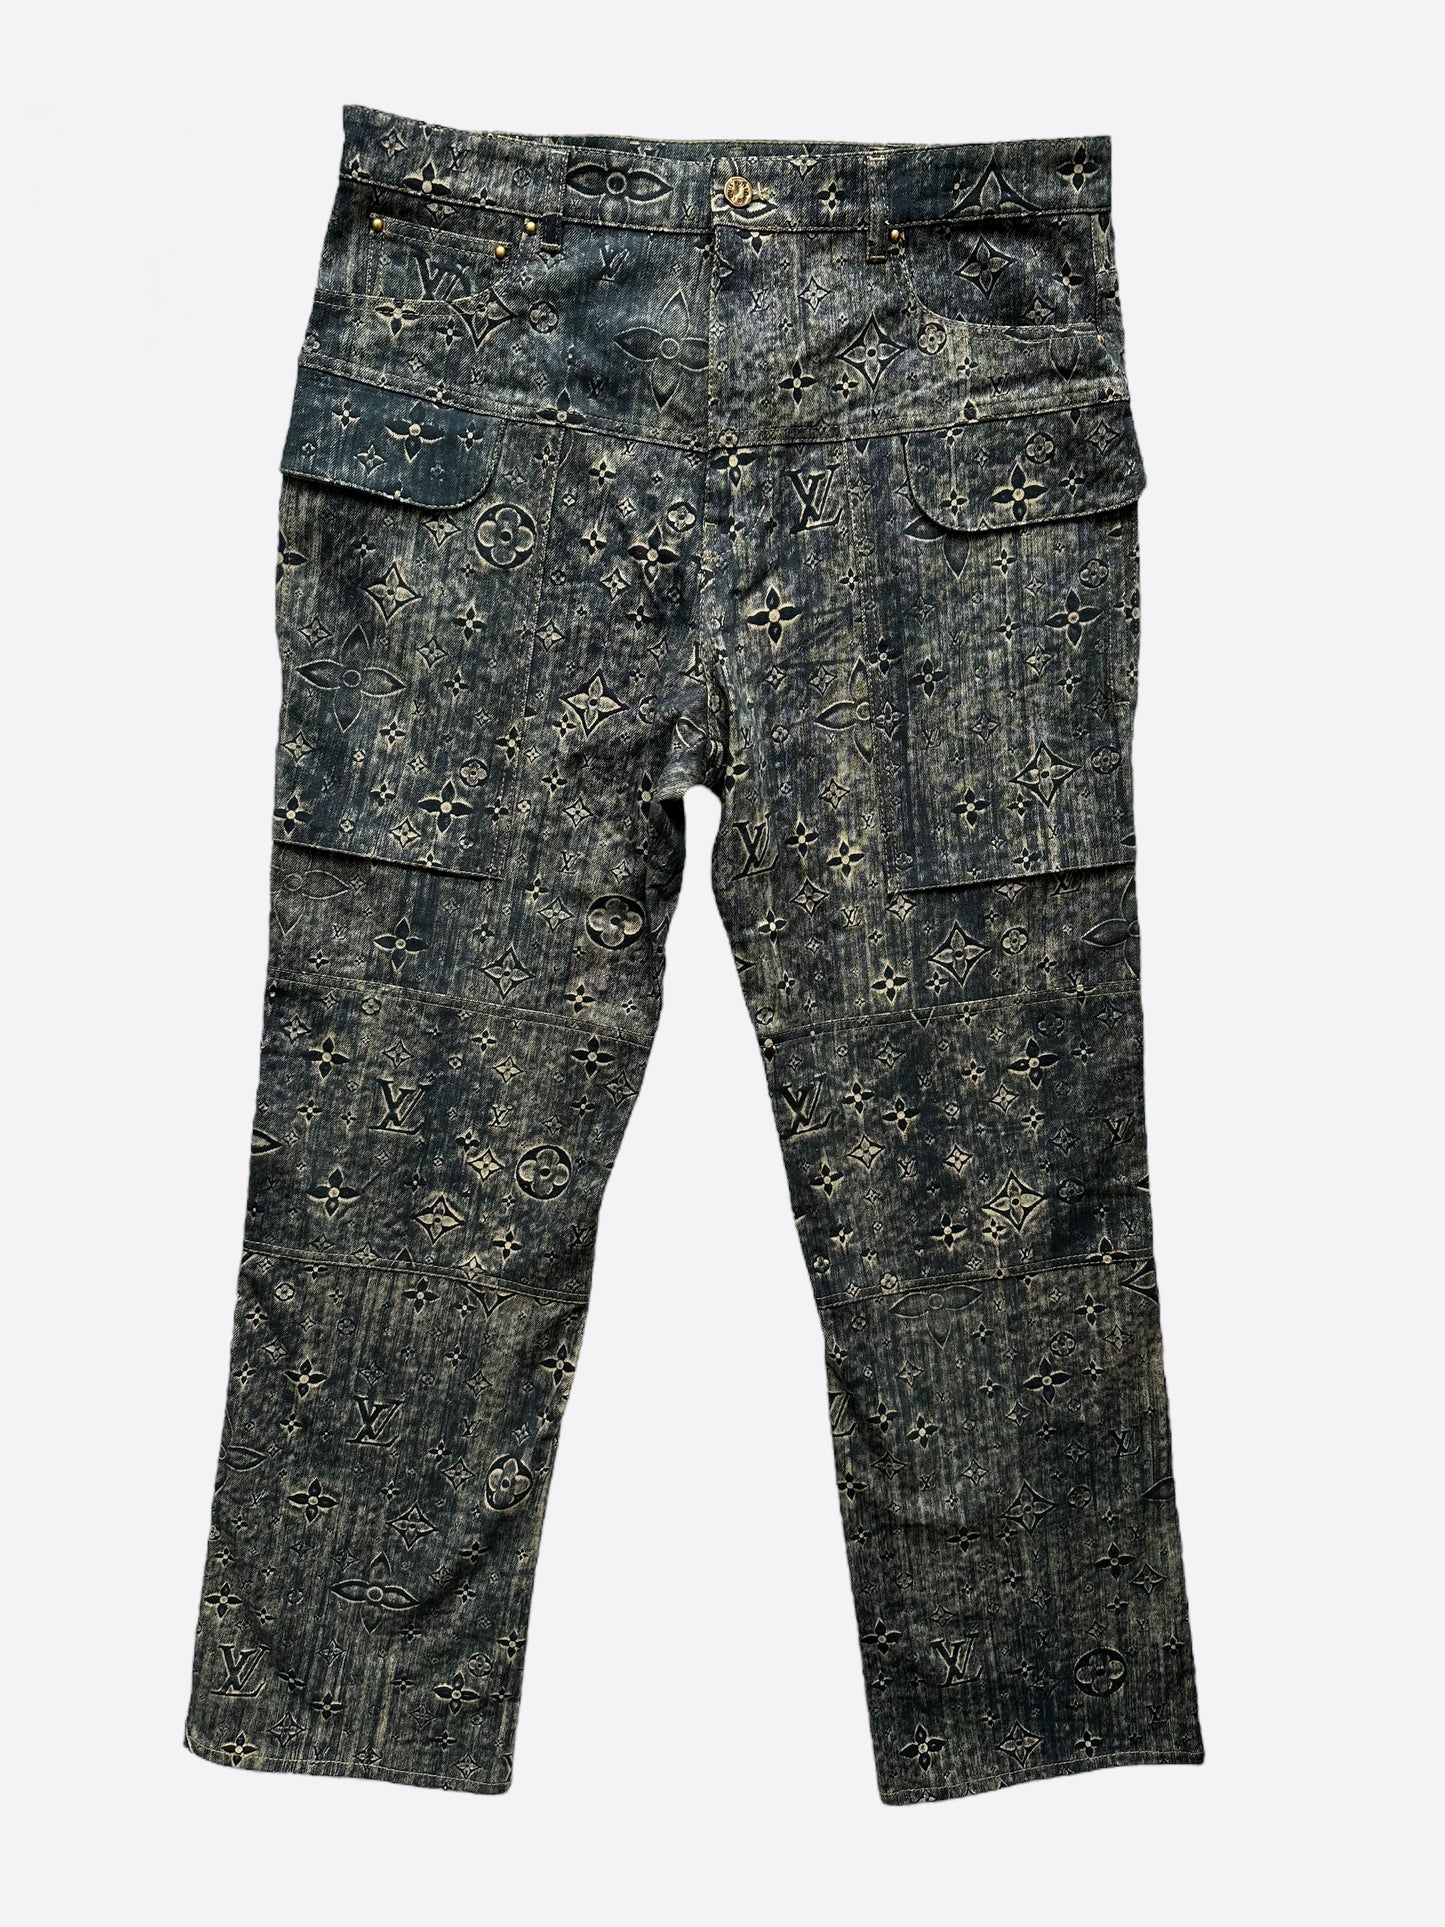 Louis Vuitton Cargo Pants Anthracite. Size 40